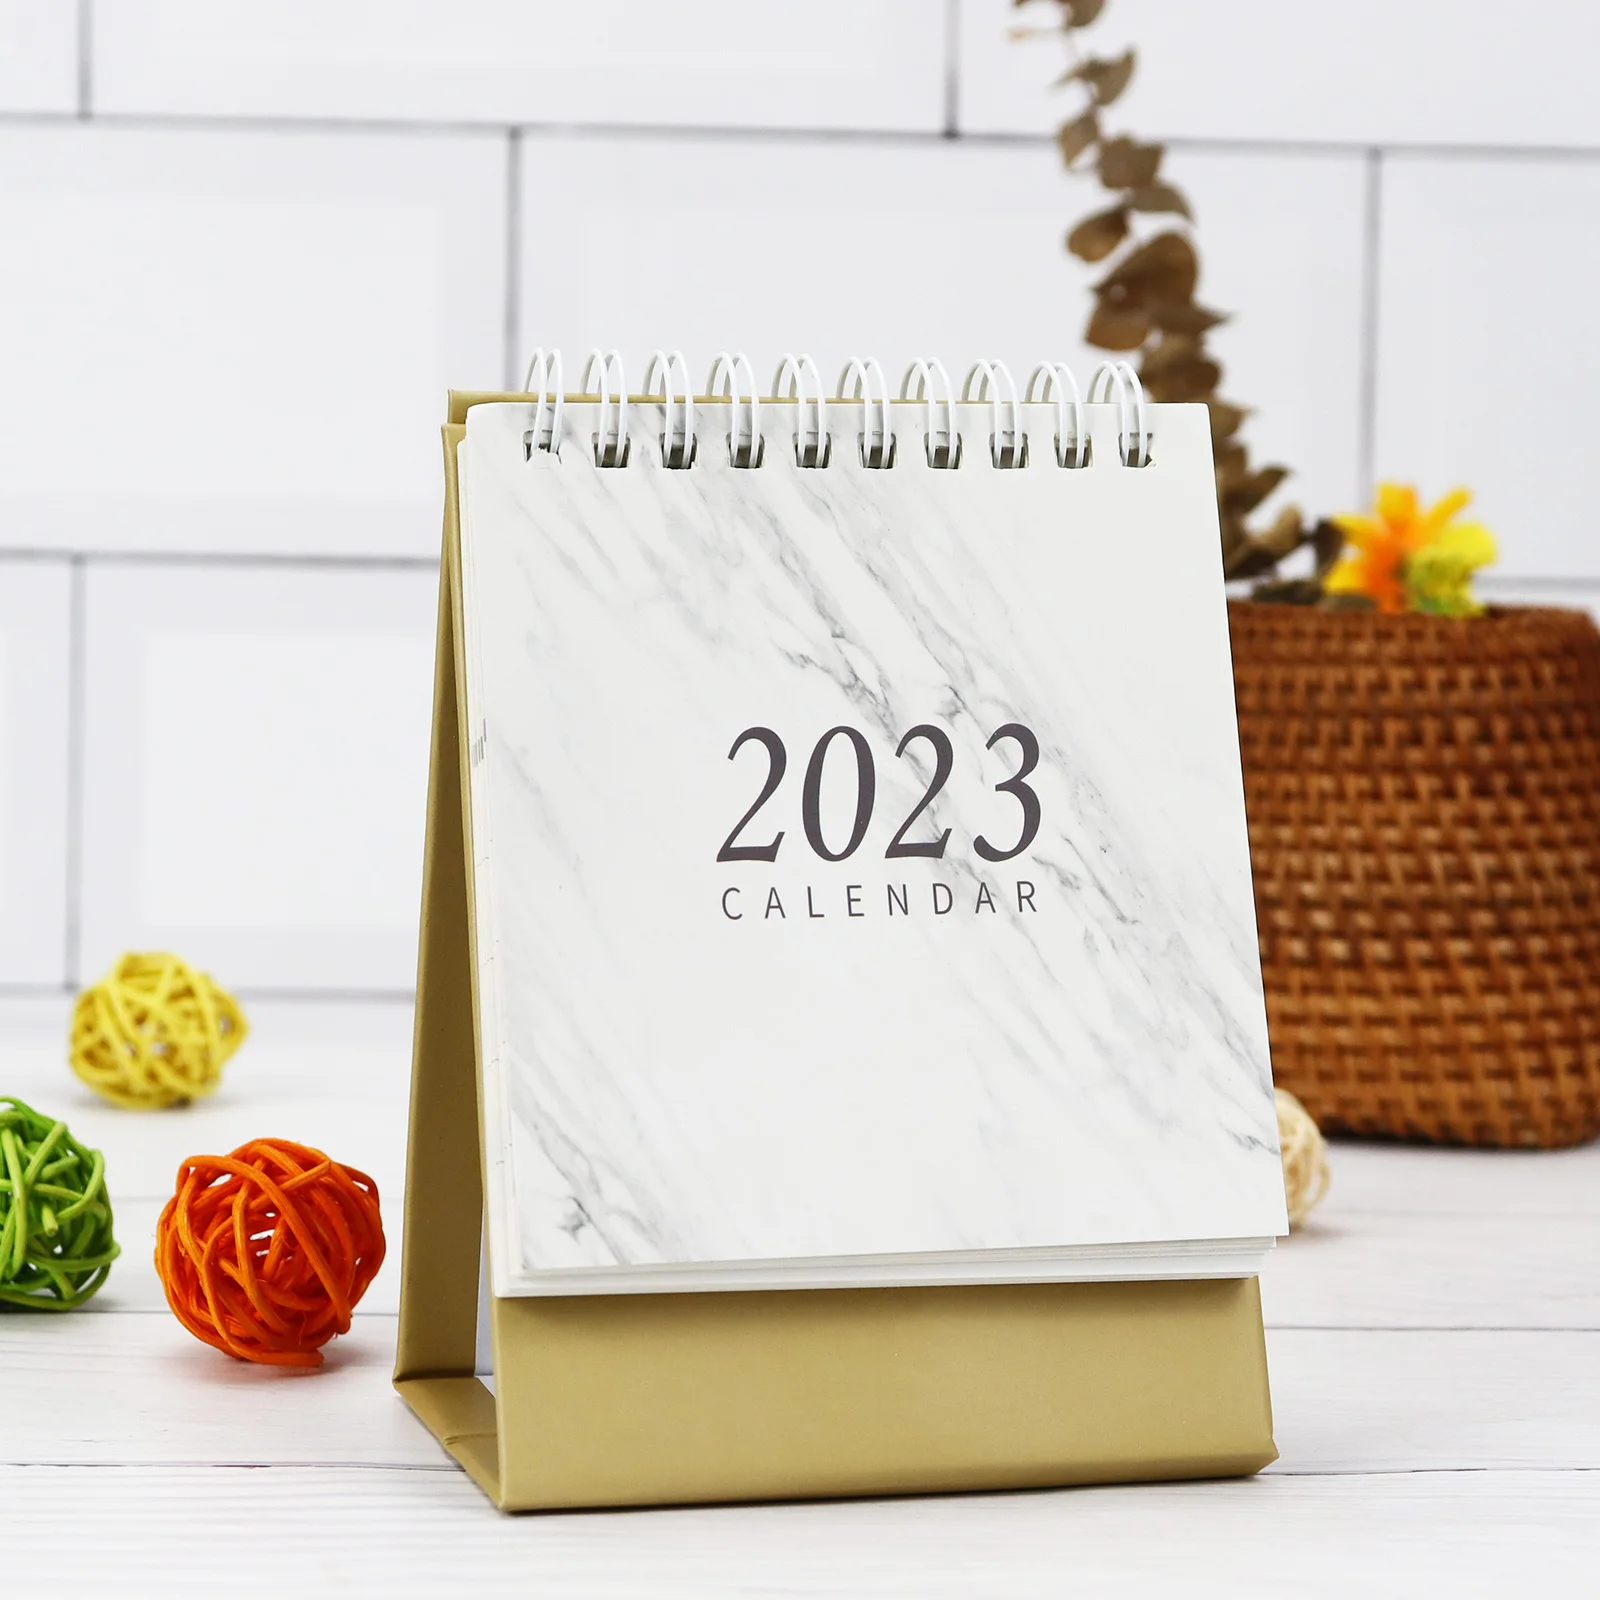 2023 Desk Calendar Marbled Design High Quality Paper Fashion Business Desktop Small Desk Calendar